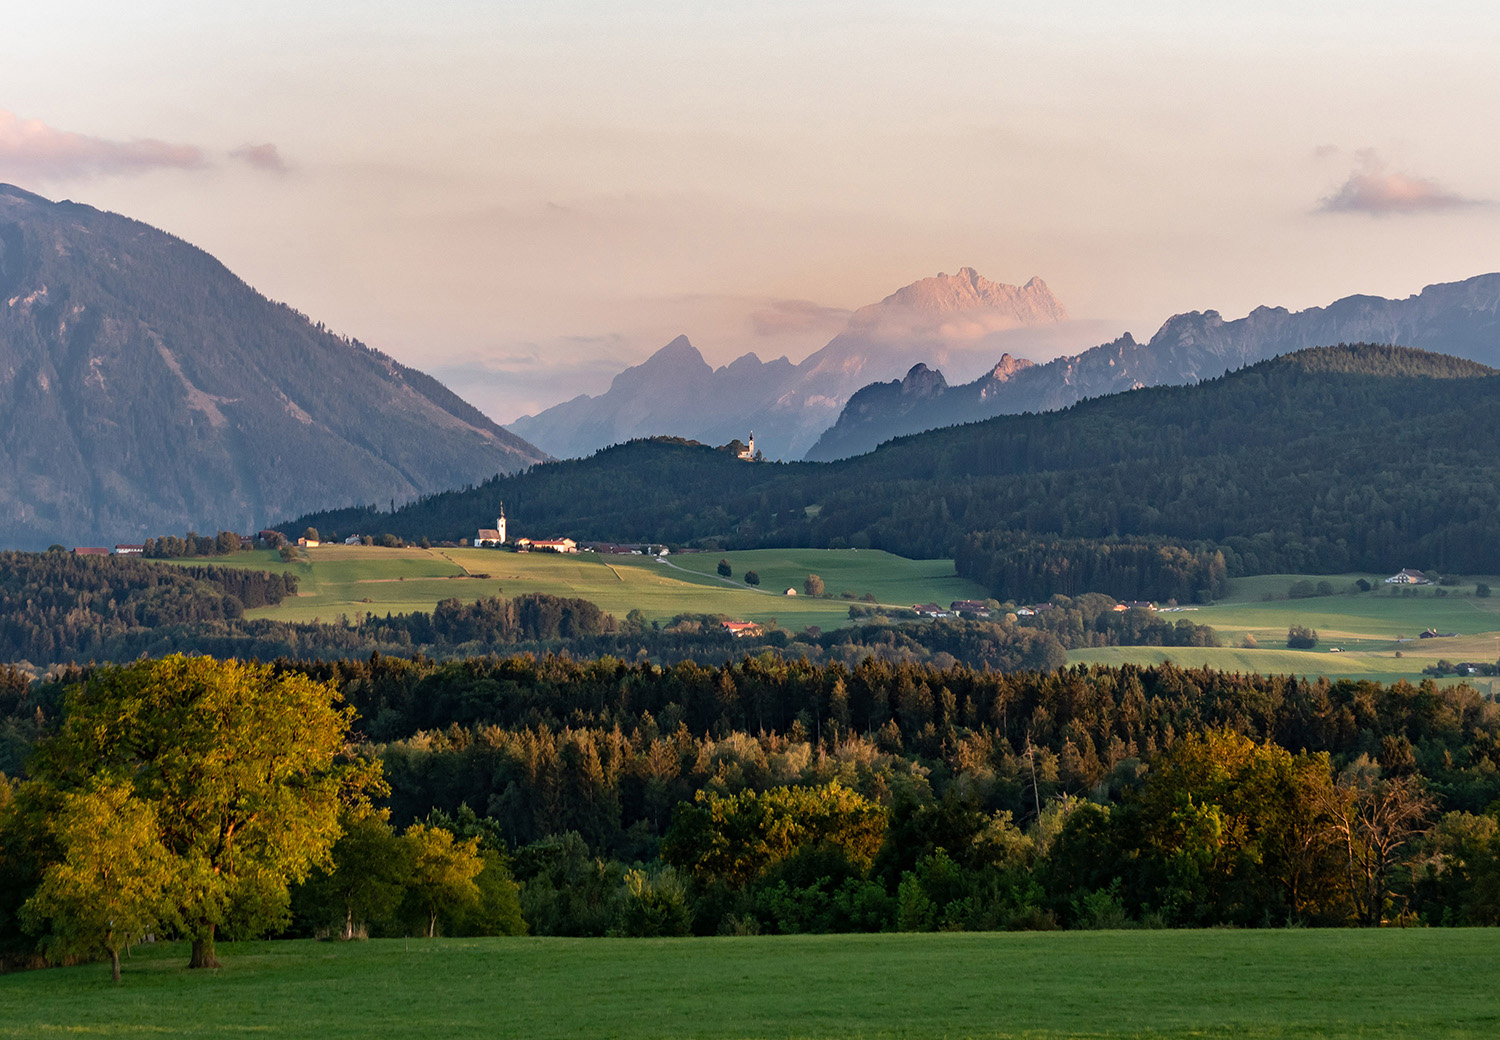 Biosphärenregion Berchtesgadener Land